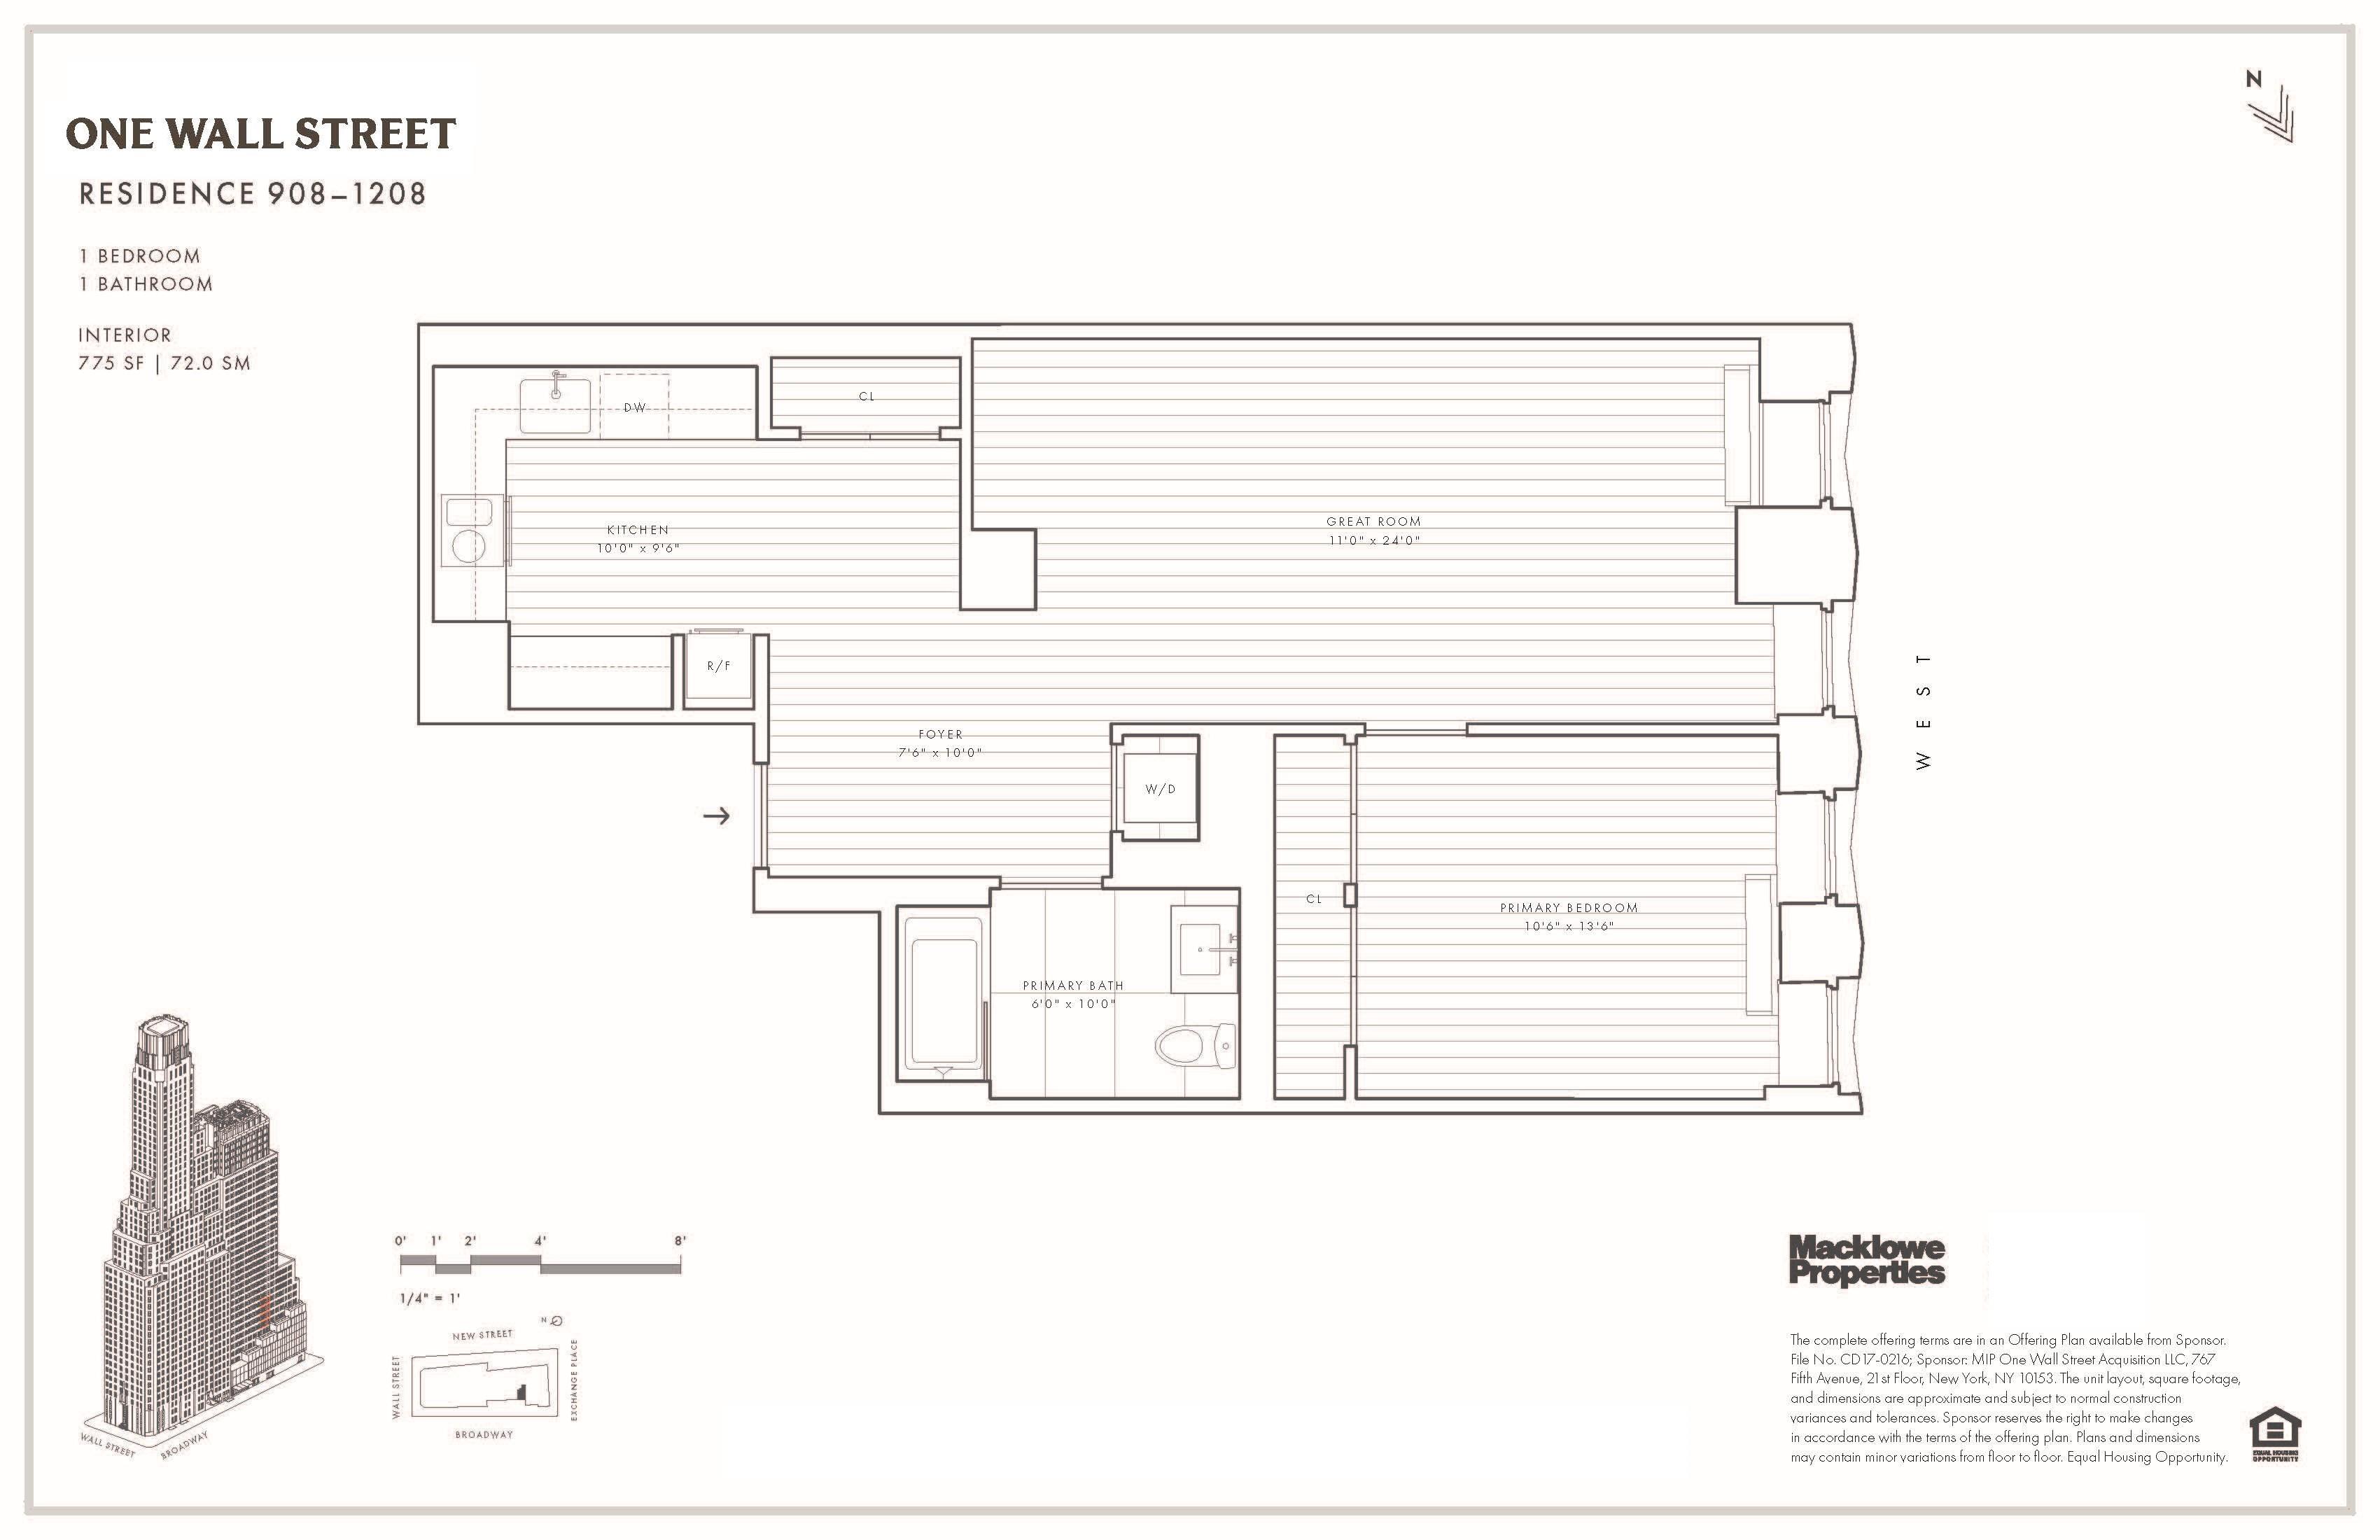 Floorplan for 1 Wall Street, 908